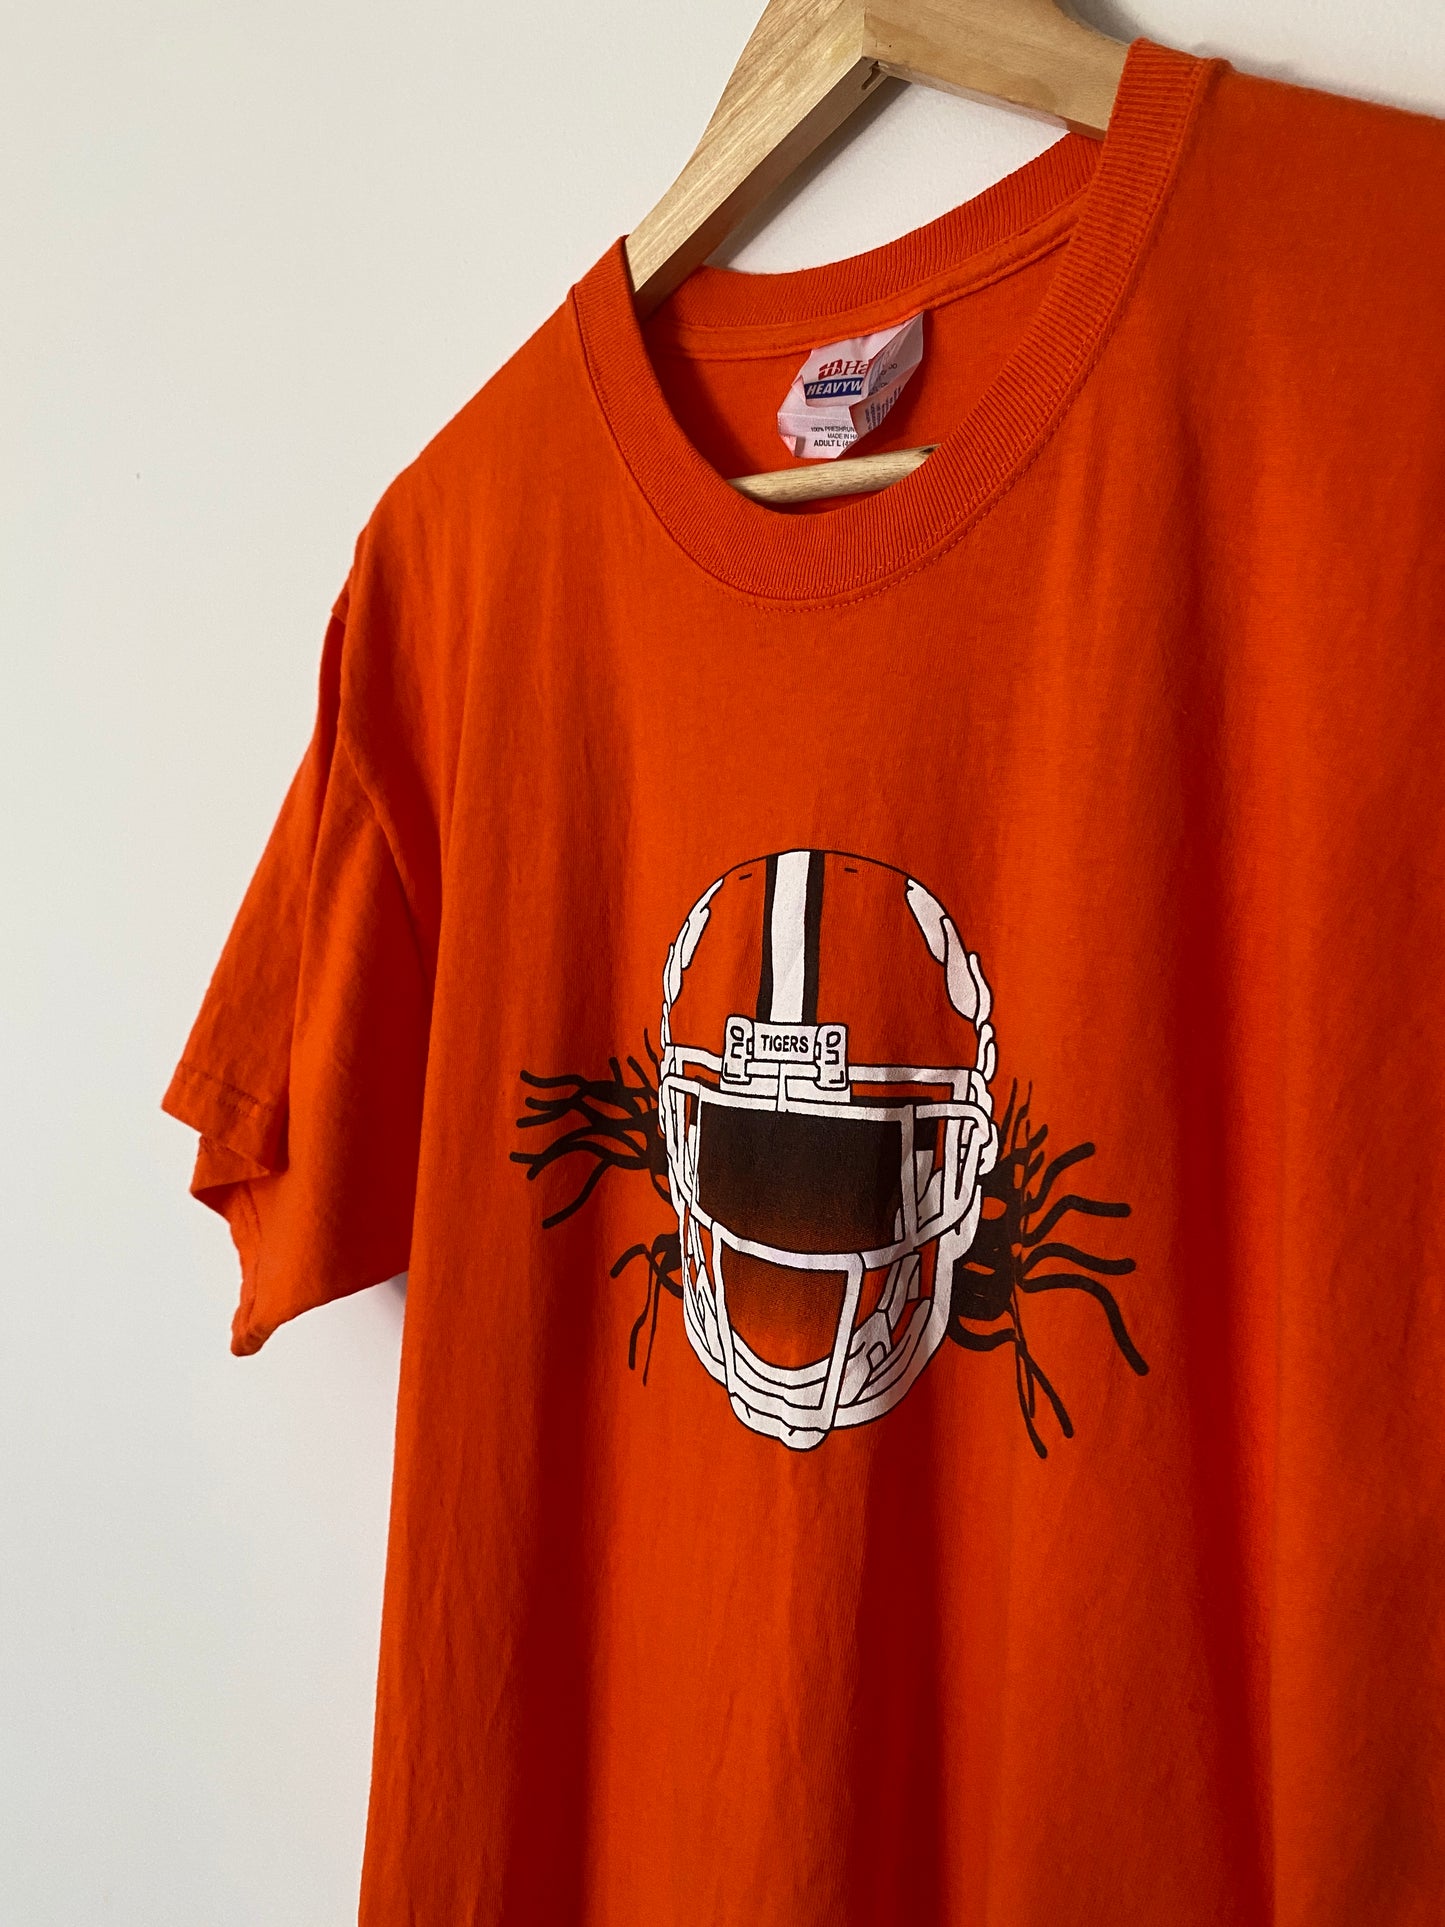 Clemson Tigers Football T-Shirt - L